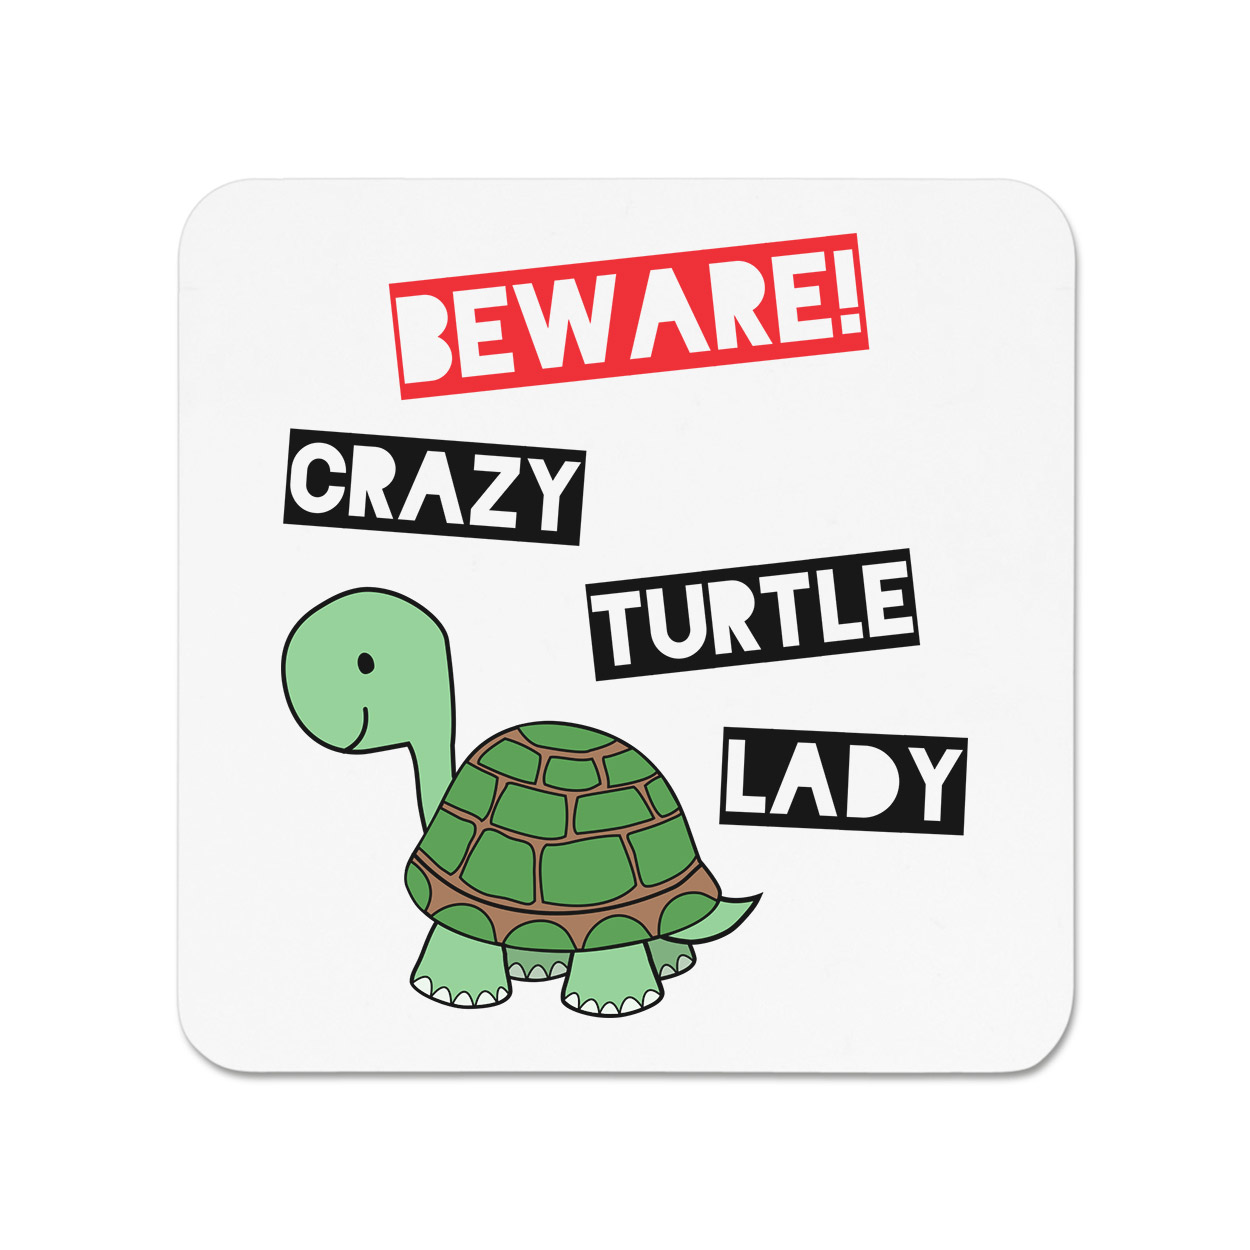 Crazy turtle lady